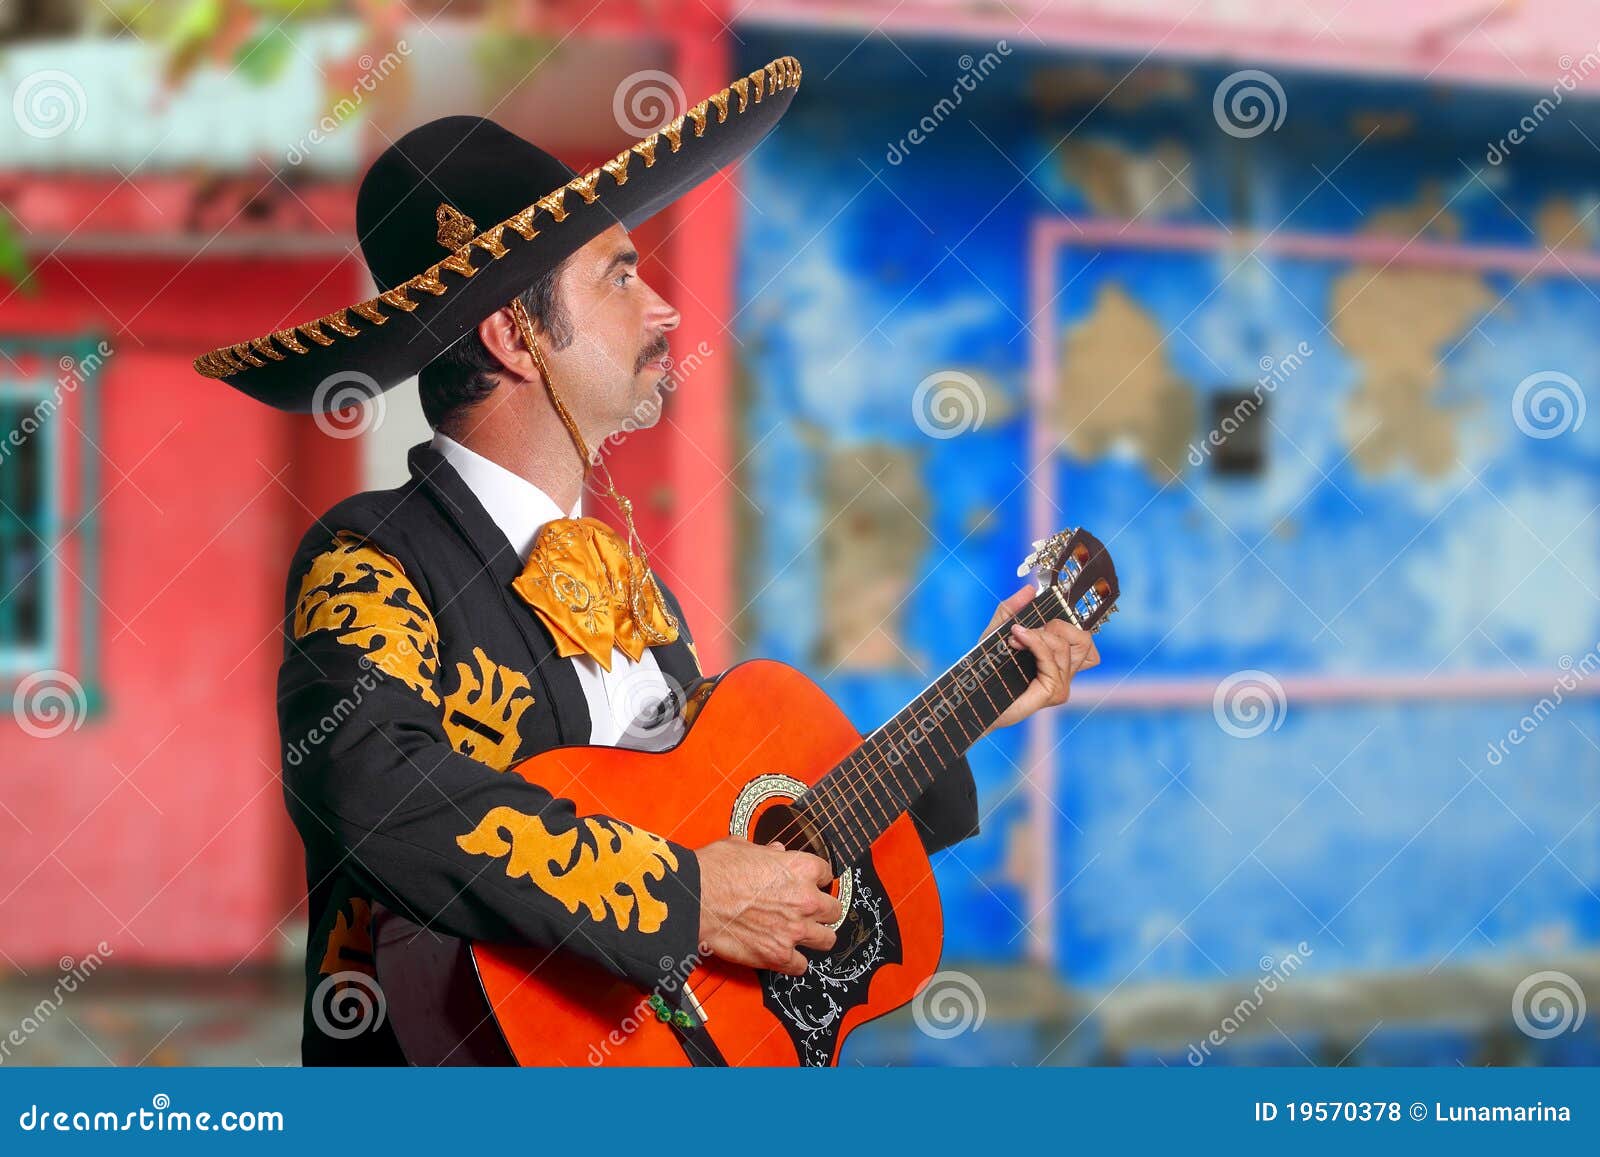 charro mariachi playing guitar mexico houses